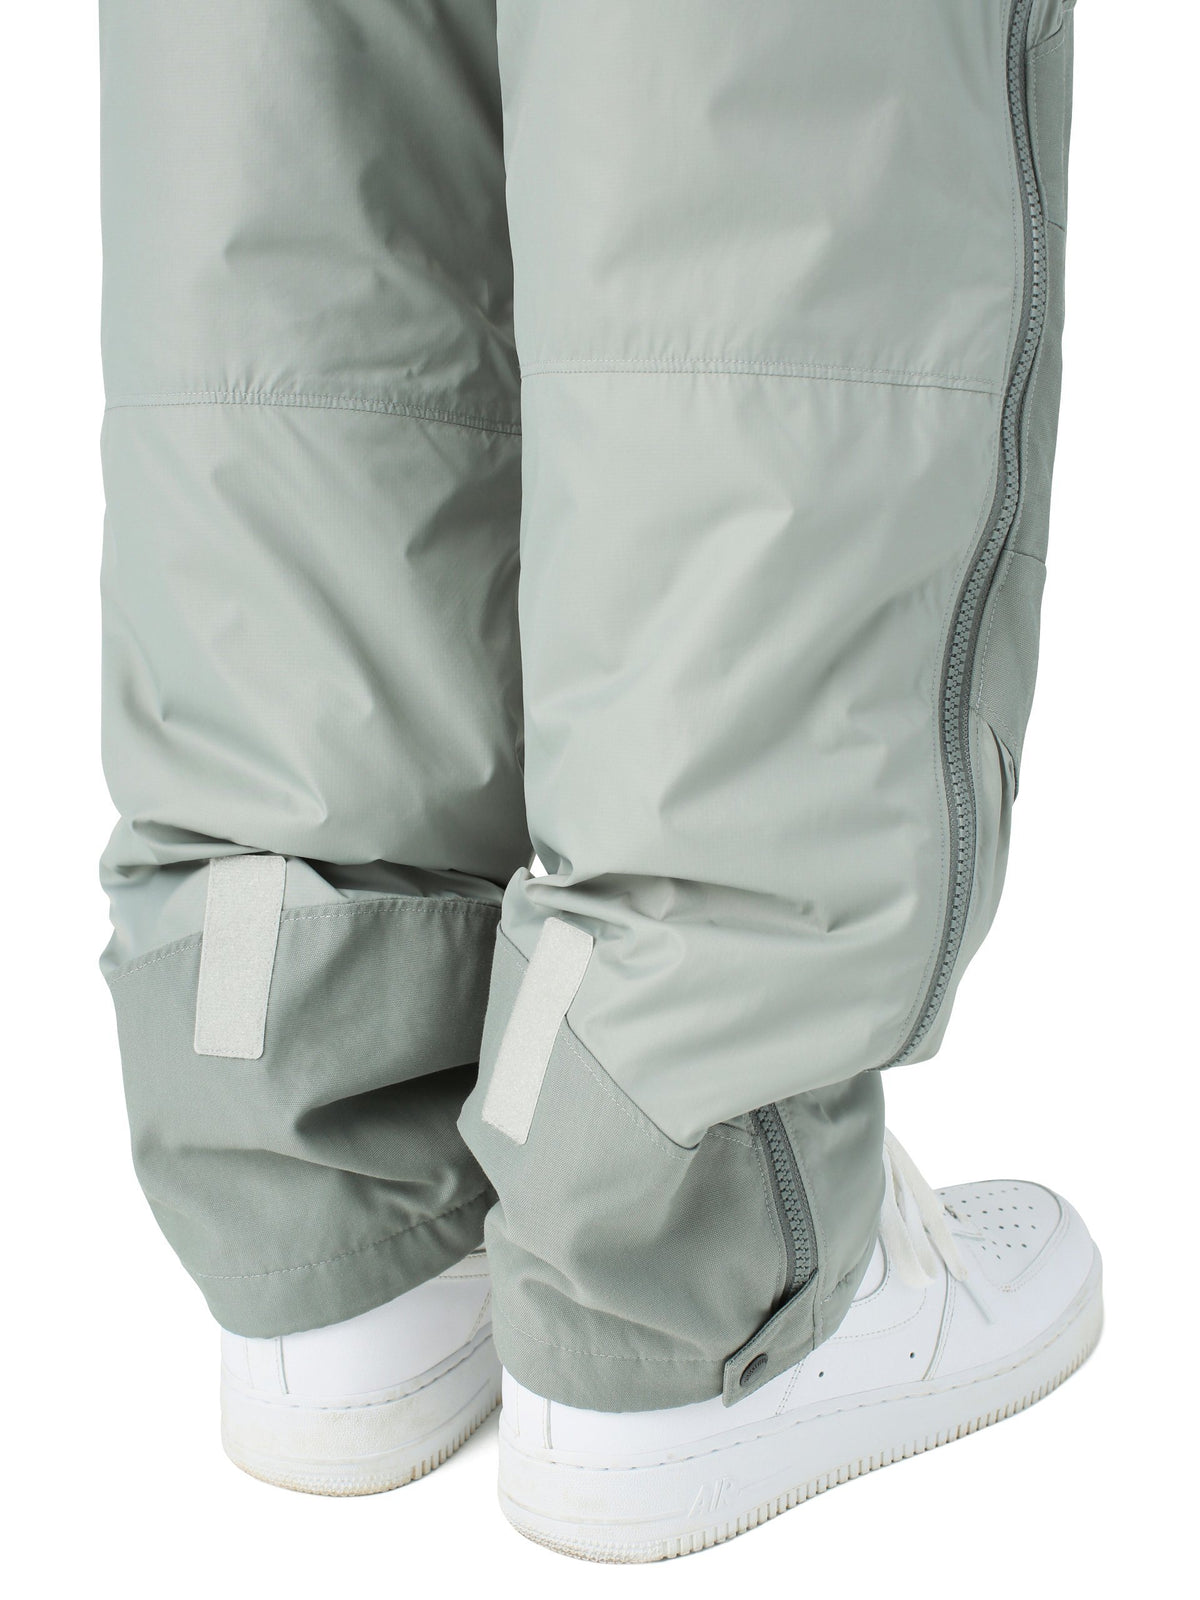 Insulated PCU Pant Pants 